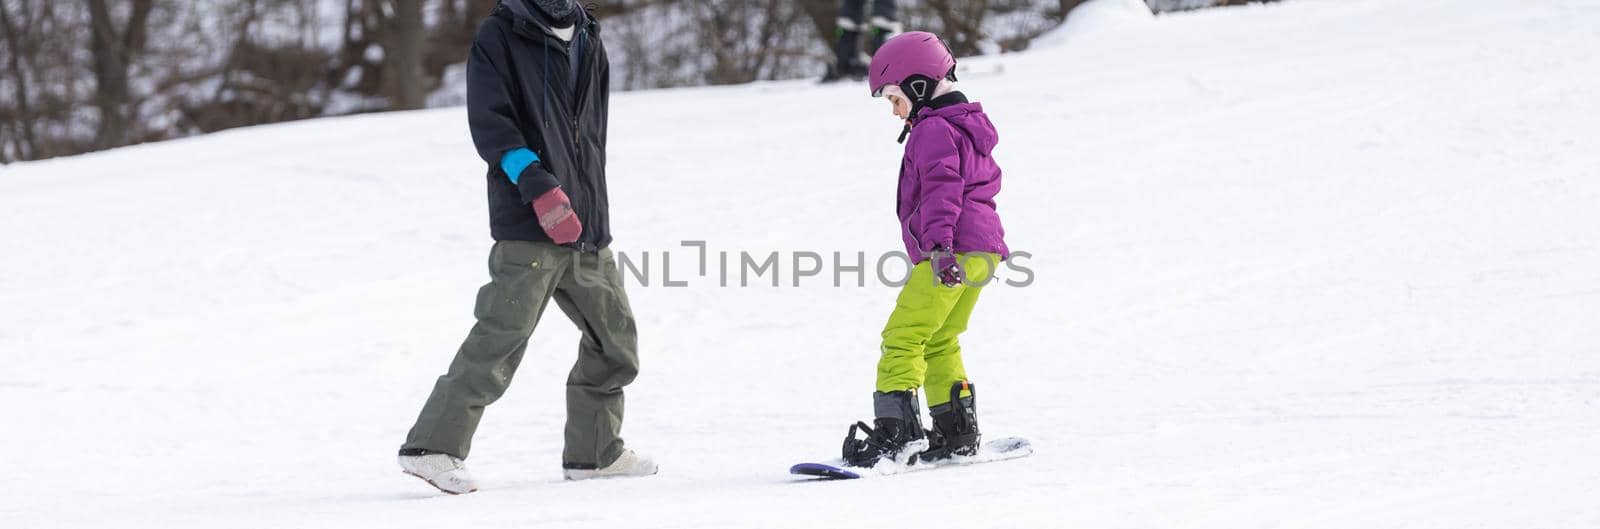 Ski Resort Father Teaching Little Daughter Snowboarding by Andelov13